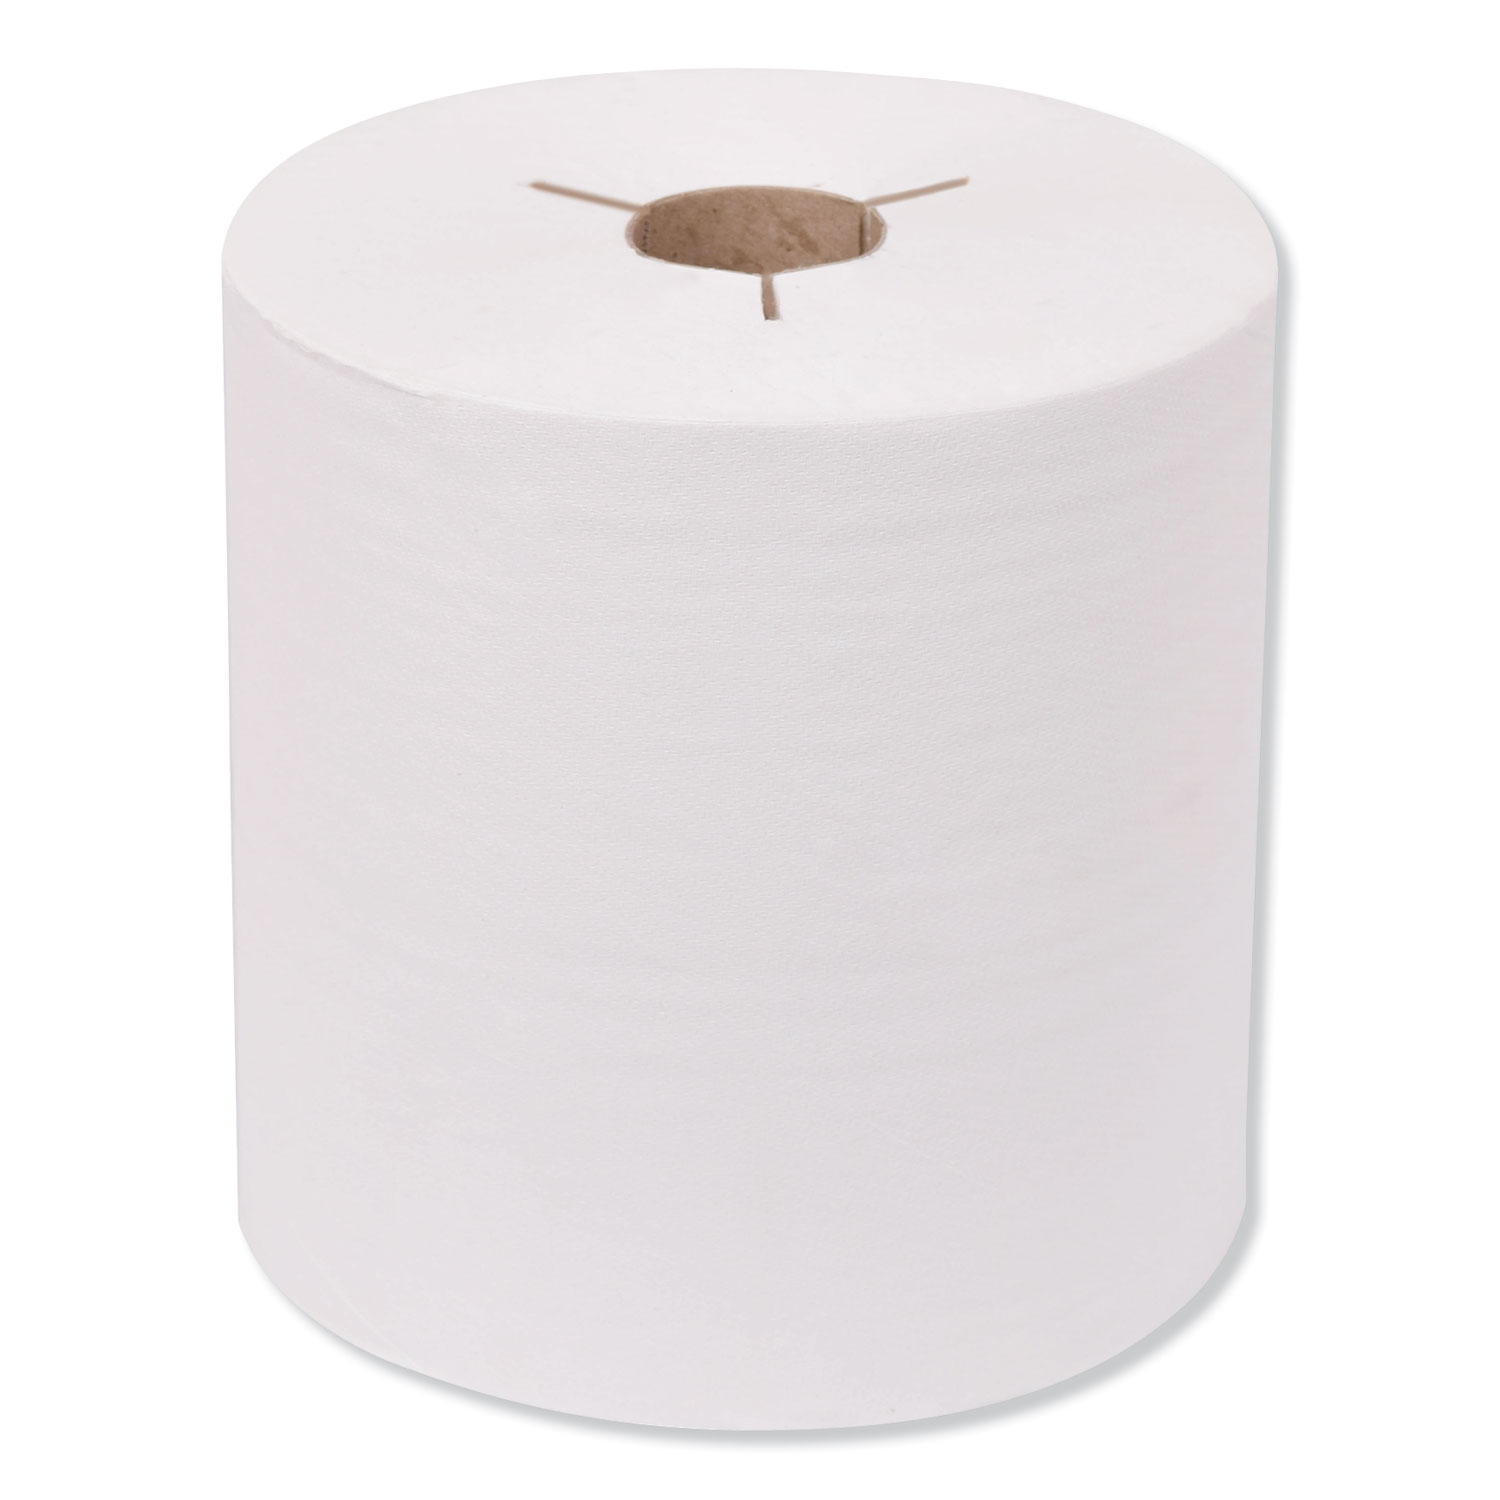  Tork 8031040 Advanced Hand Towel Roll, Notched, 1-Ply, 8 x 10, White, 1200/Roll, 6 Rolls/Carton (TRK8031040) 